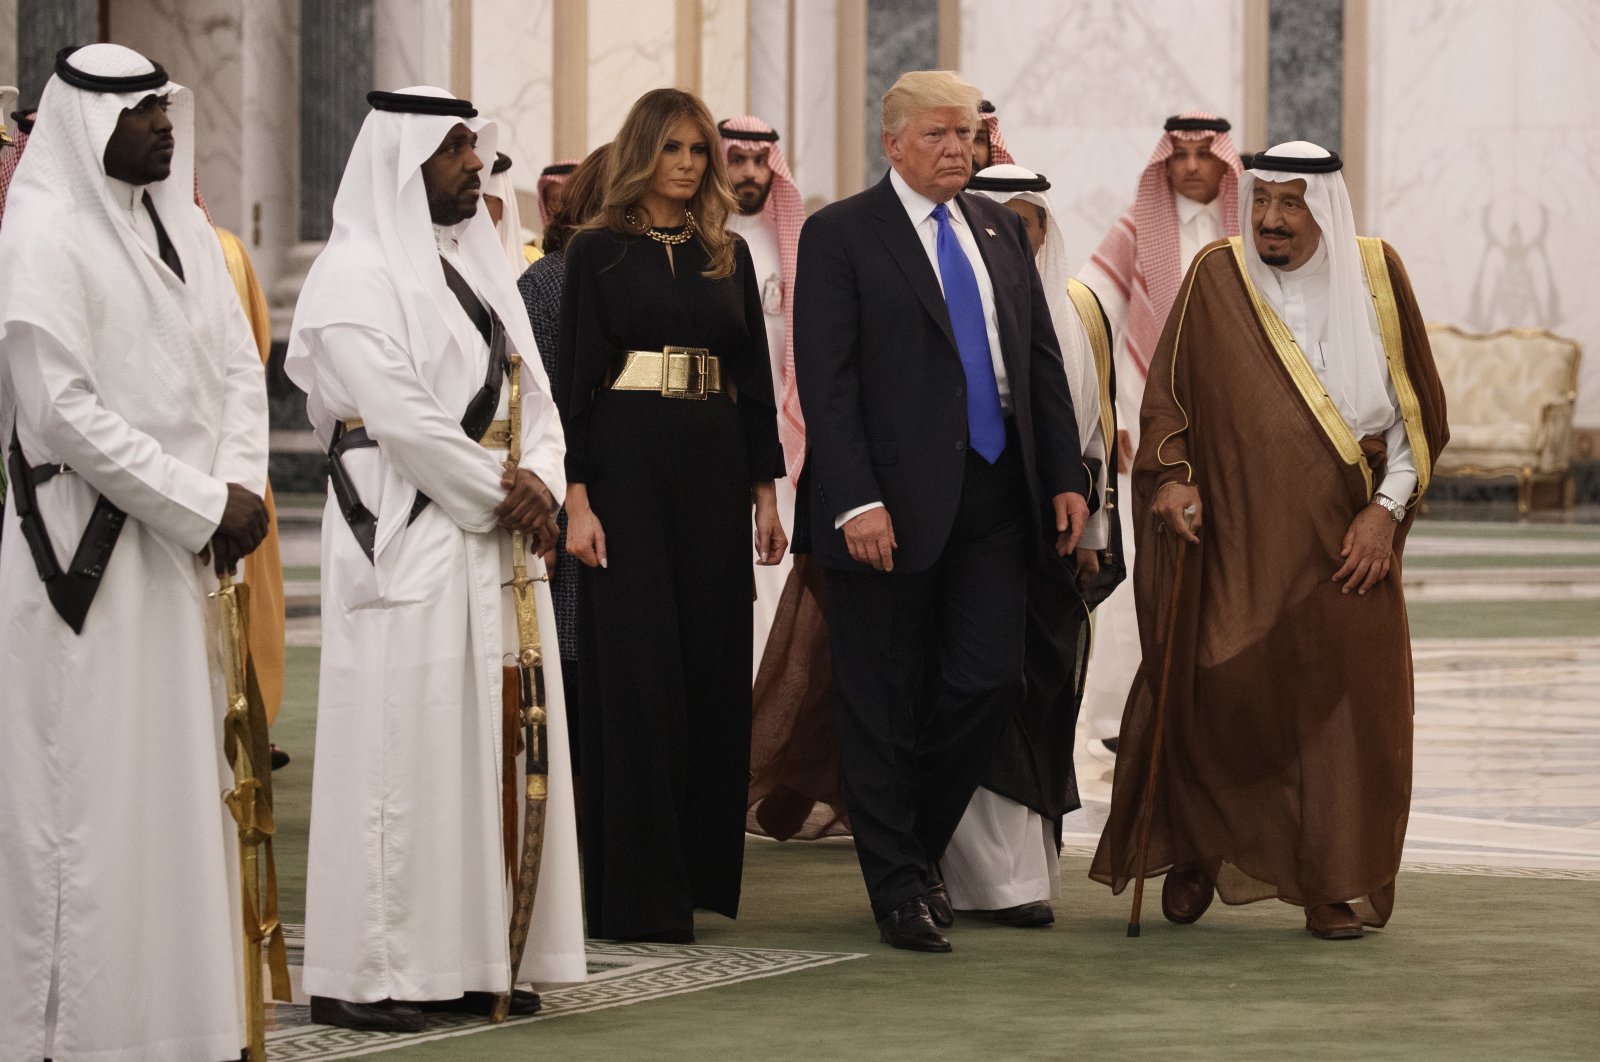 Former U.S. President Donald Trump and first lady Melania Trump walk with Saudi King Salman to a coffee ceremony and presentation ceremony of the Collar of Abdulaziz Al Saud Medal at the Royal Court Palace in Riyadh, Saudi Arabia, May 20, 2017. (AP Photo)